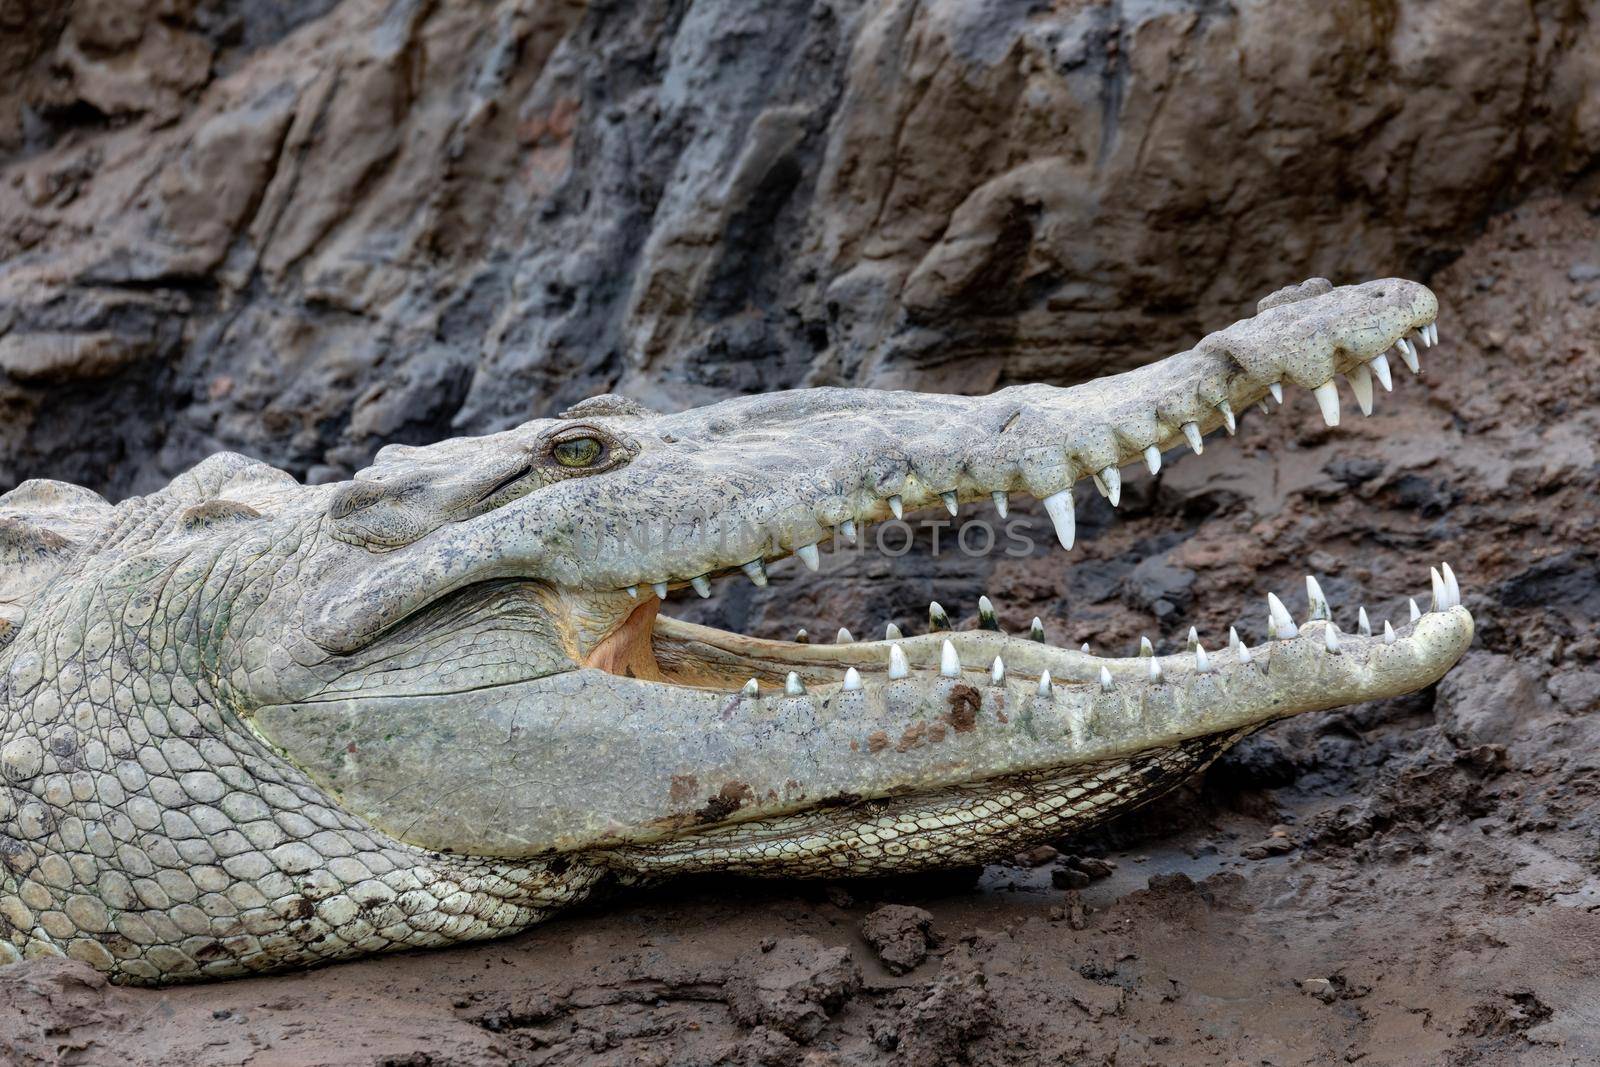 Resting crocodile with opened mouth full of tooths, American crocodile (Crocodylus acutus), Rio Tarcoles, Costa Rica Wildlife